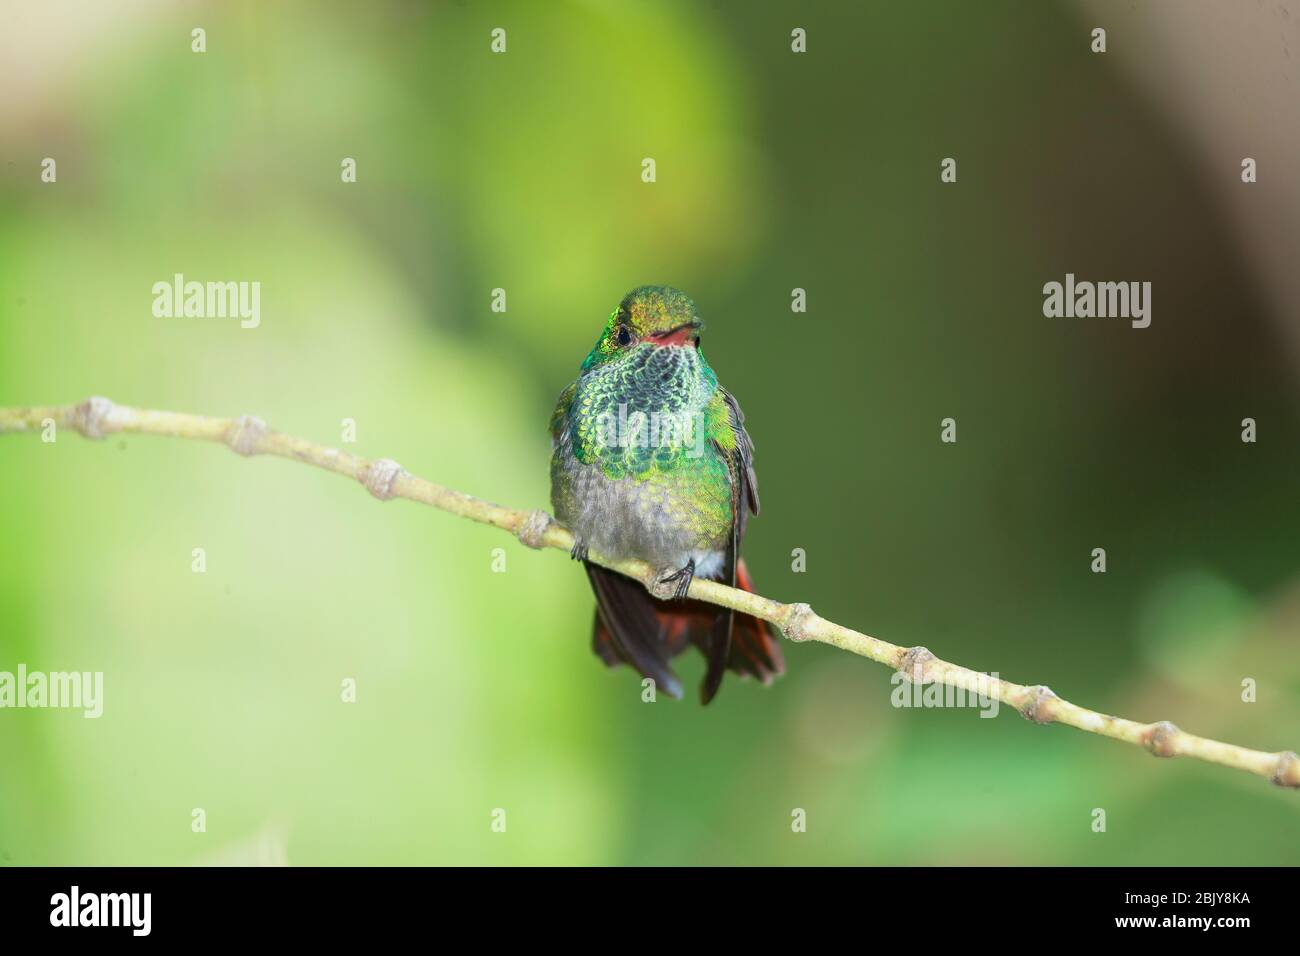 Rufous-tailed hummingbird (Amazilia tzacatl) on branch, Costa Rica, Central America Stock Photo